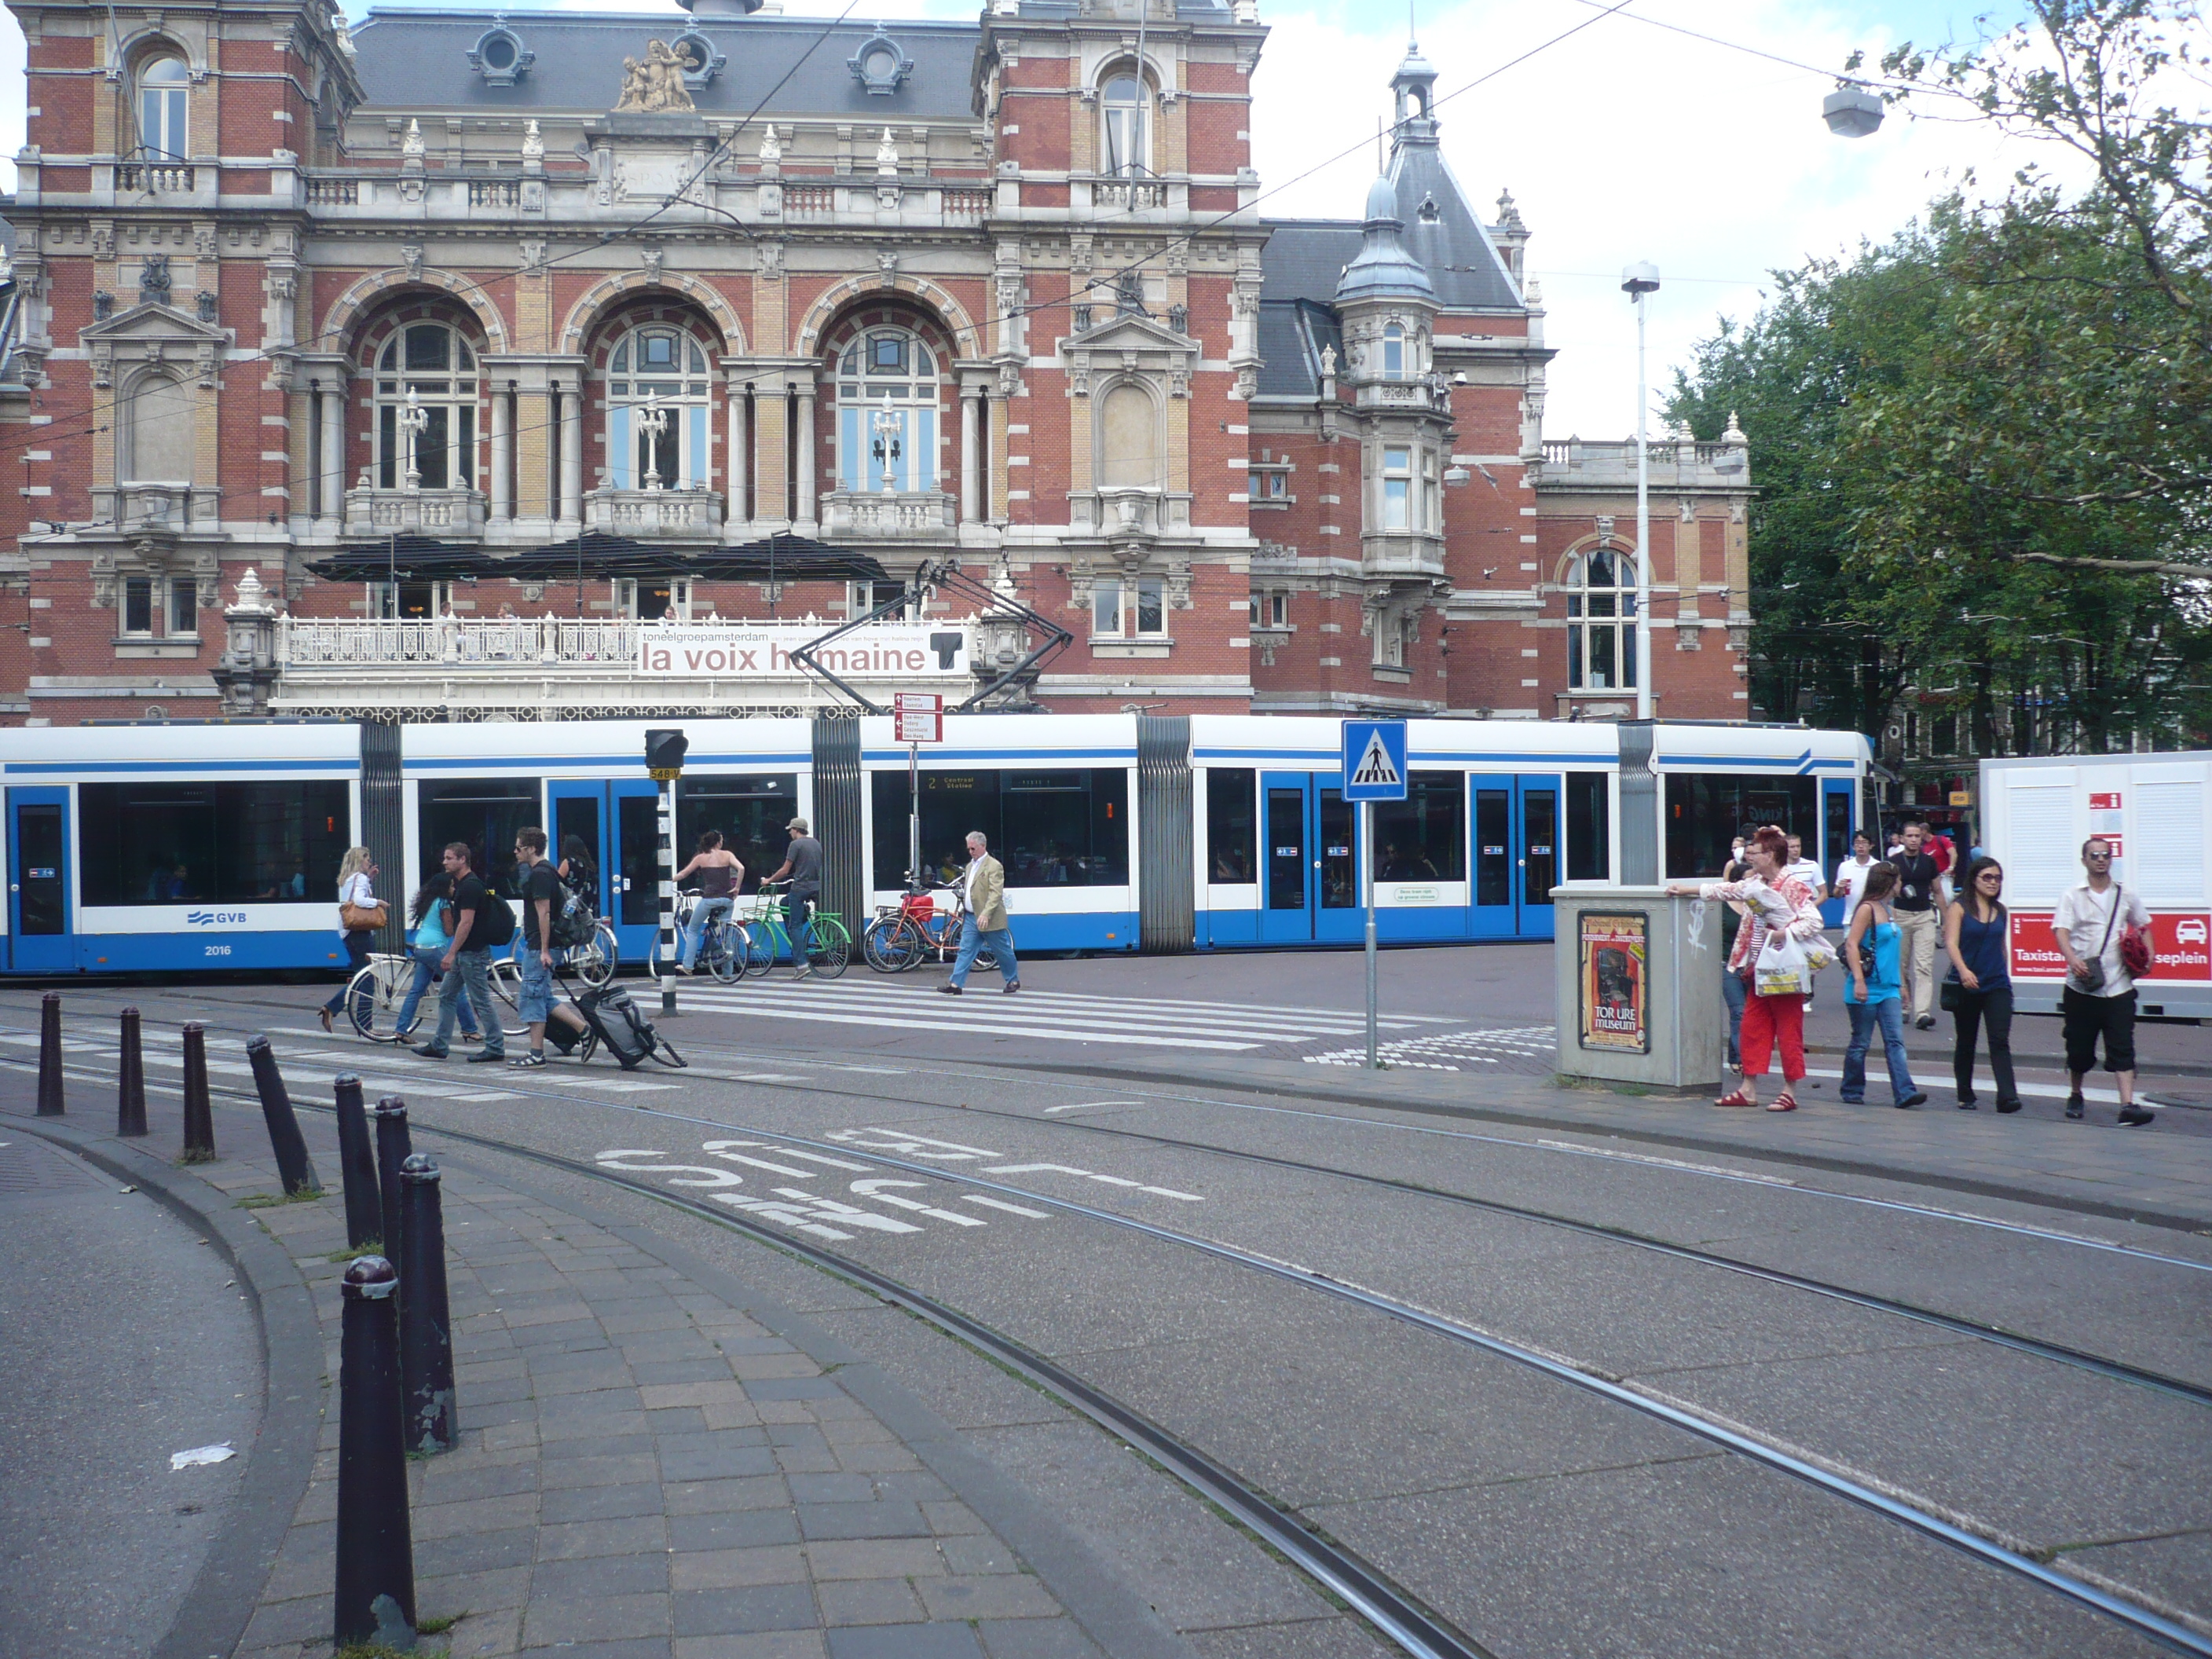 Amsterdam tram photo